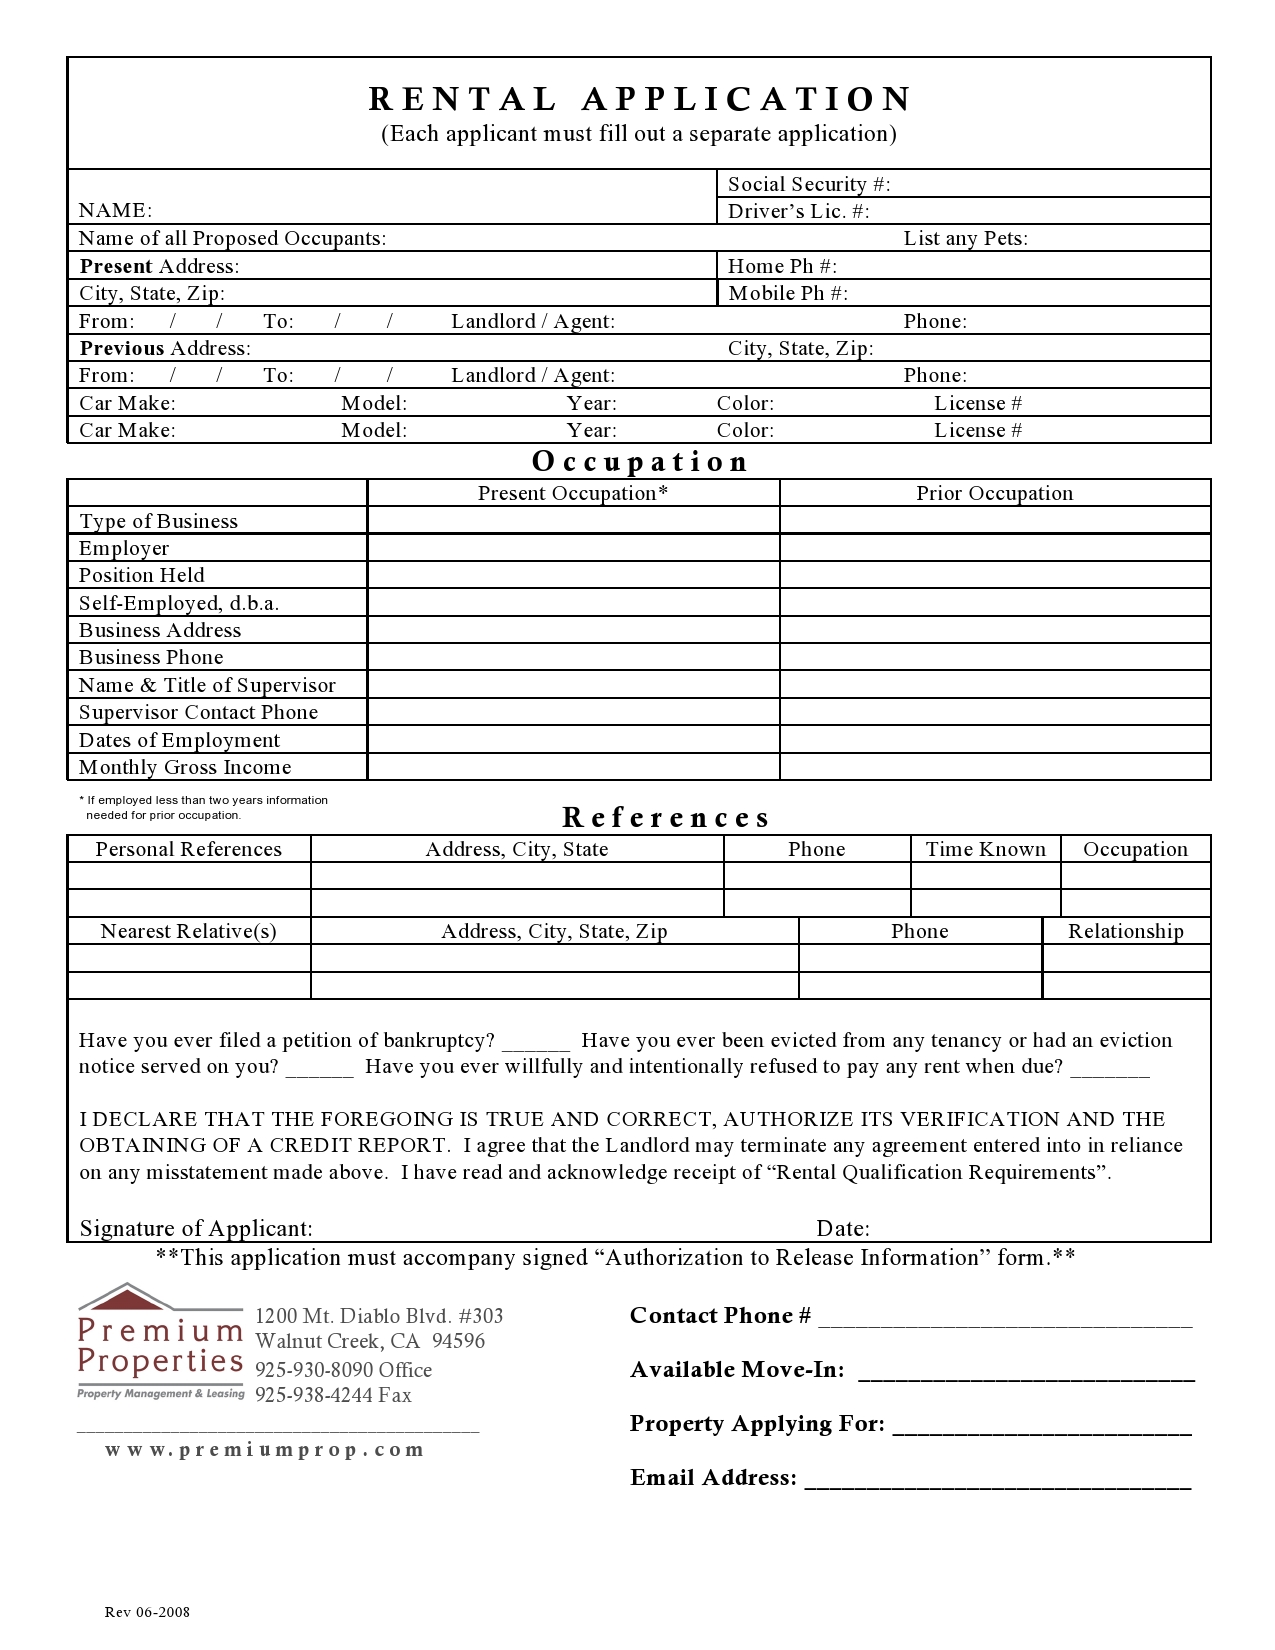 Free rental application form 06